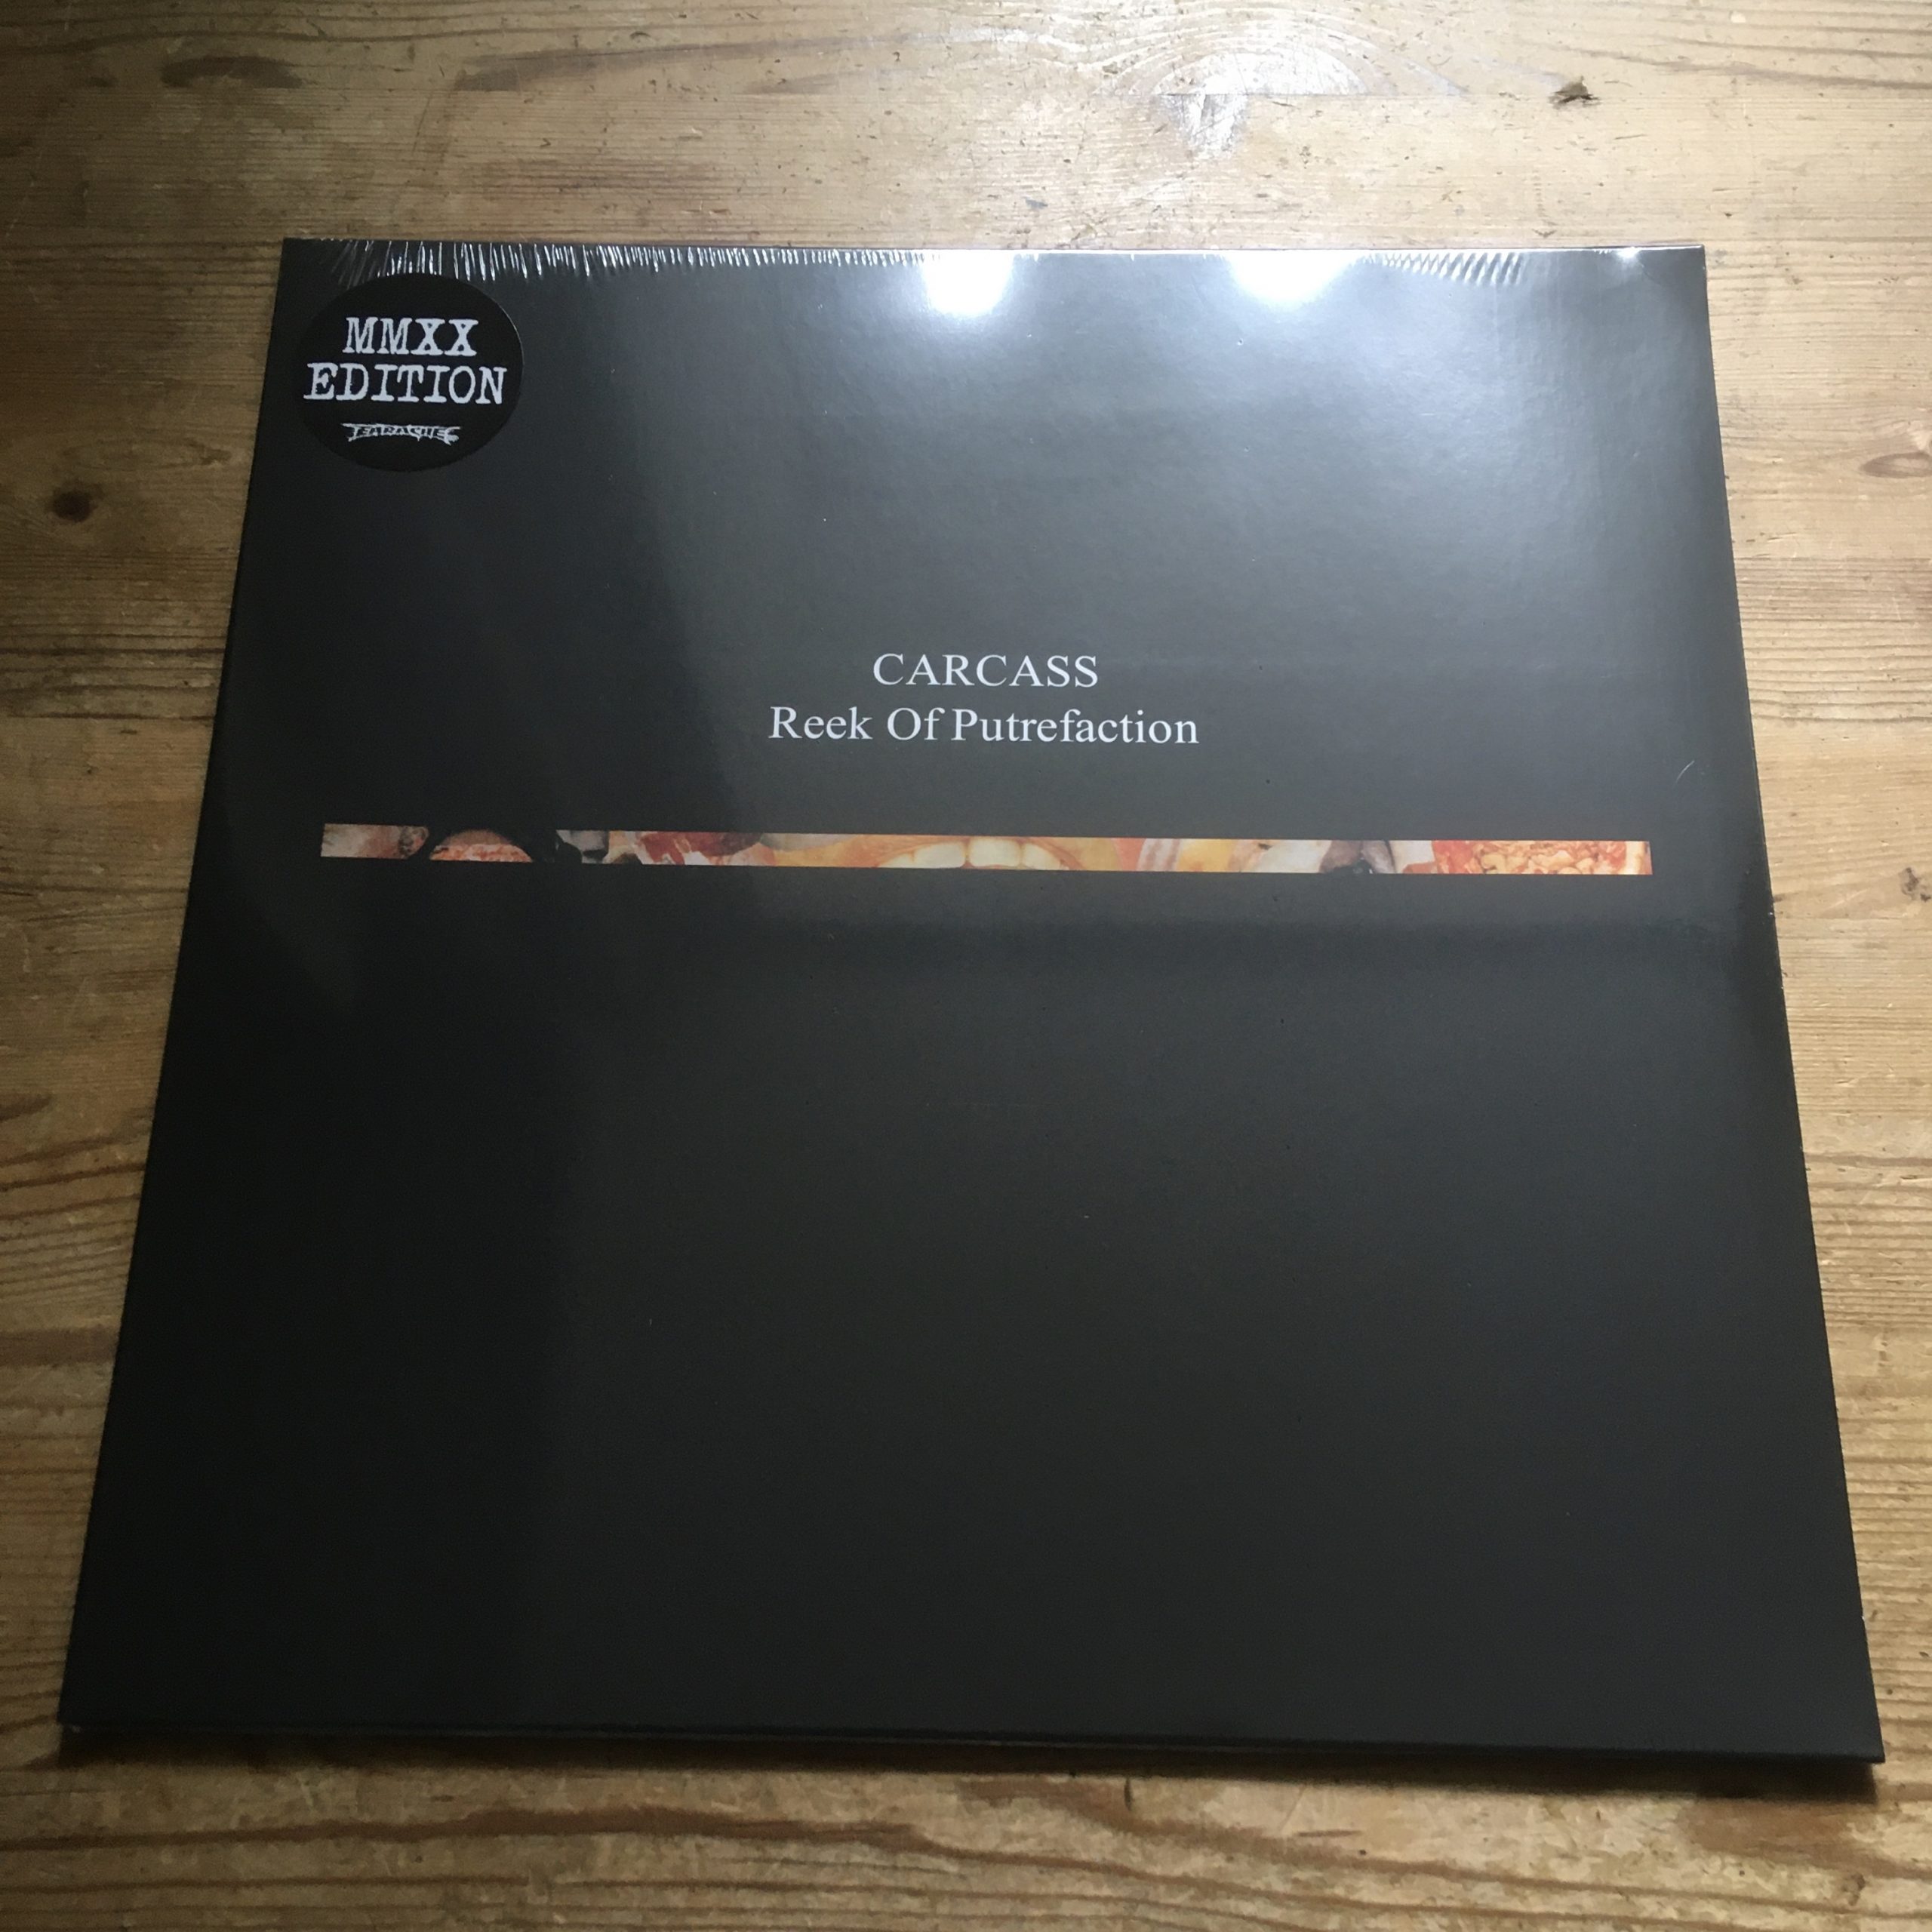 Photo of the Carcass - "Reek of Putrefaction" LP (Black vinyl)